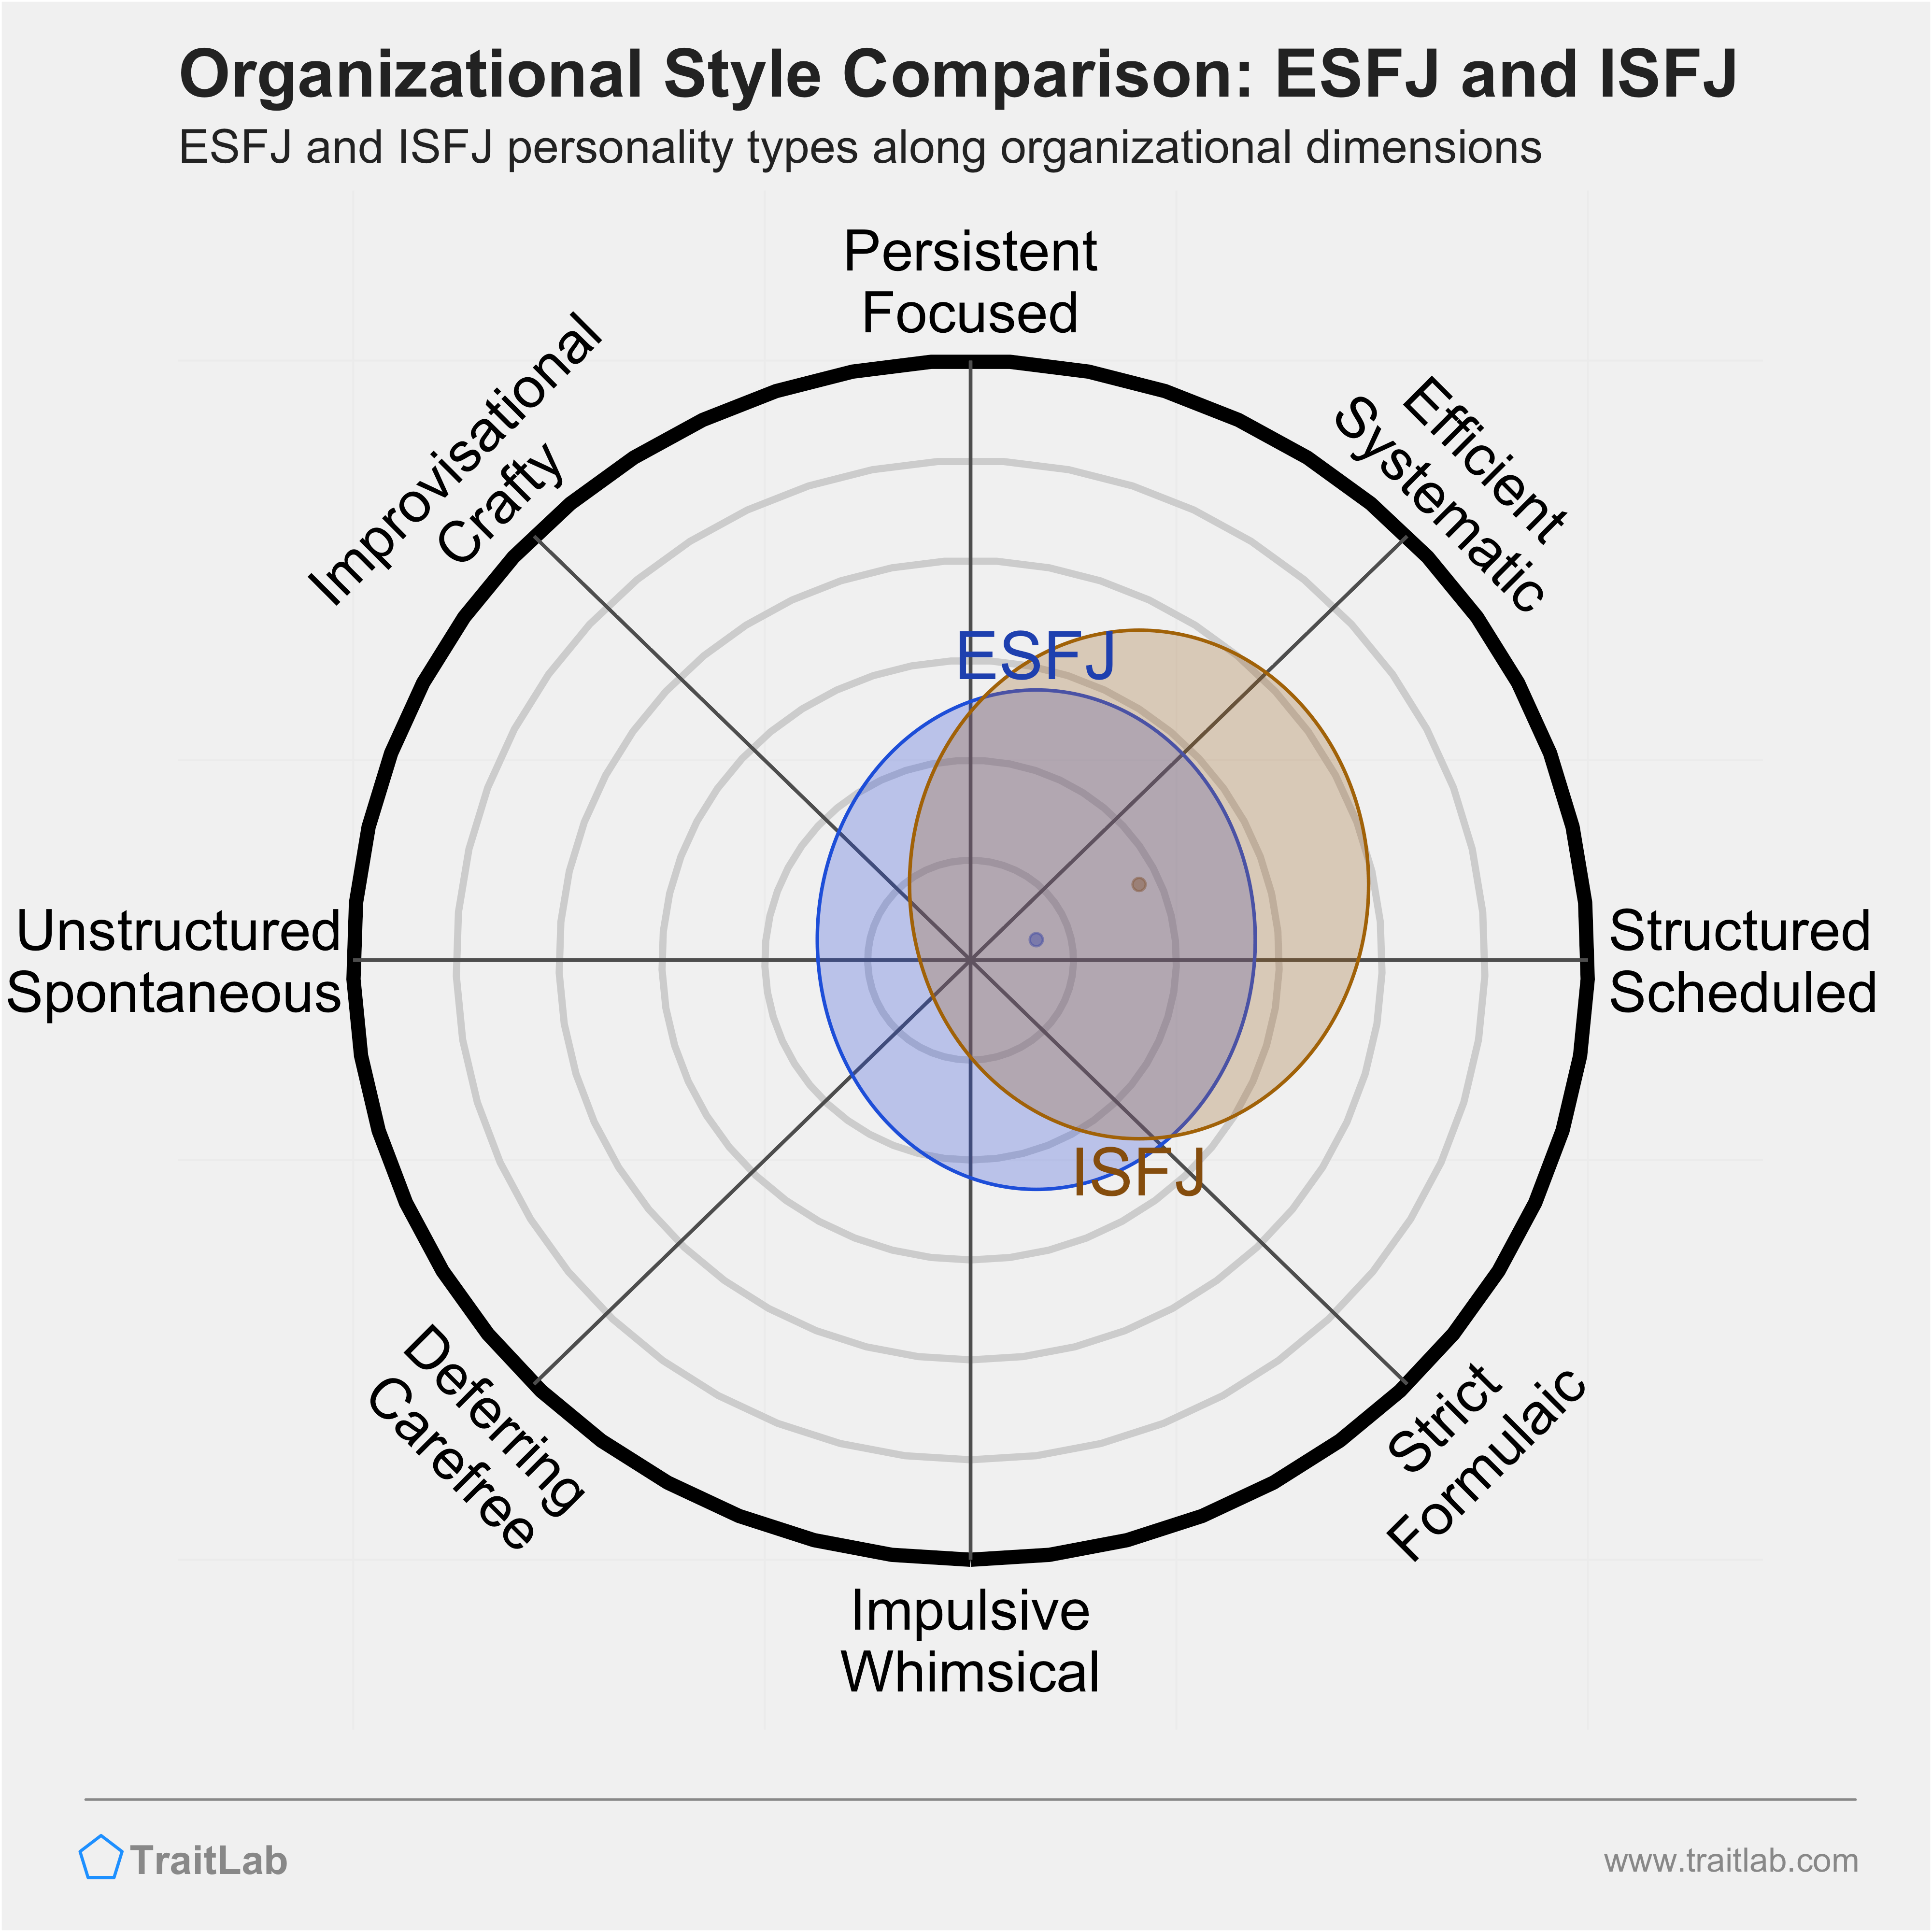 ESFJ and ISFJ comparison across organizational dimensions